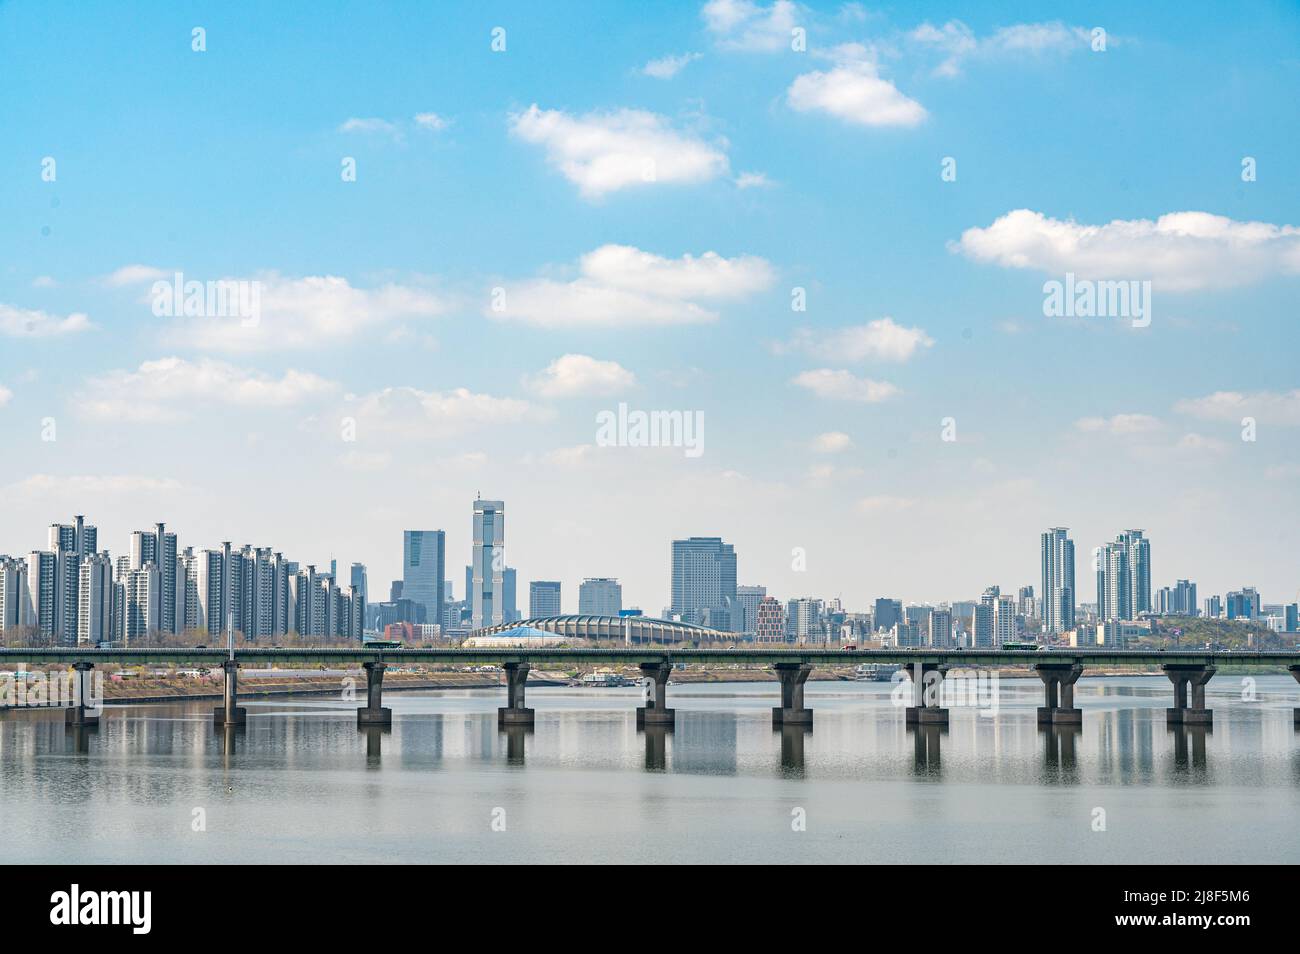 Scenery of the Han River in Seoul, South Korea Stock Photo